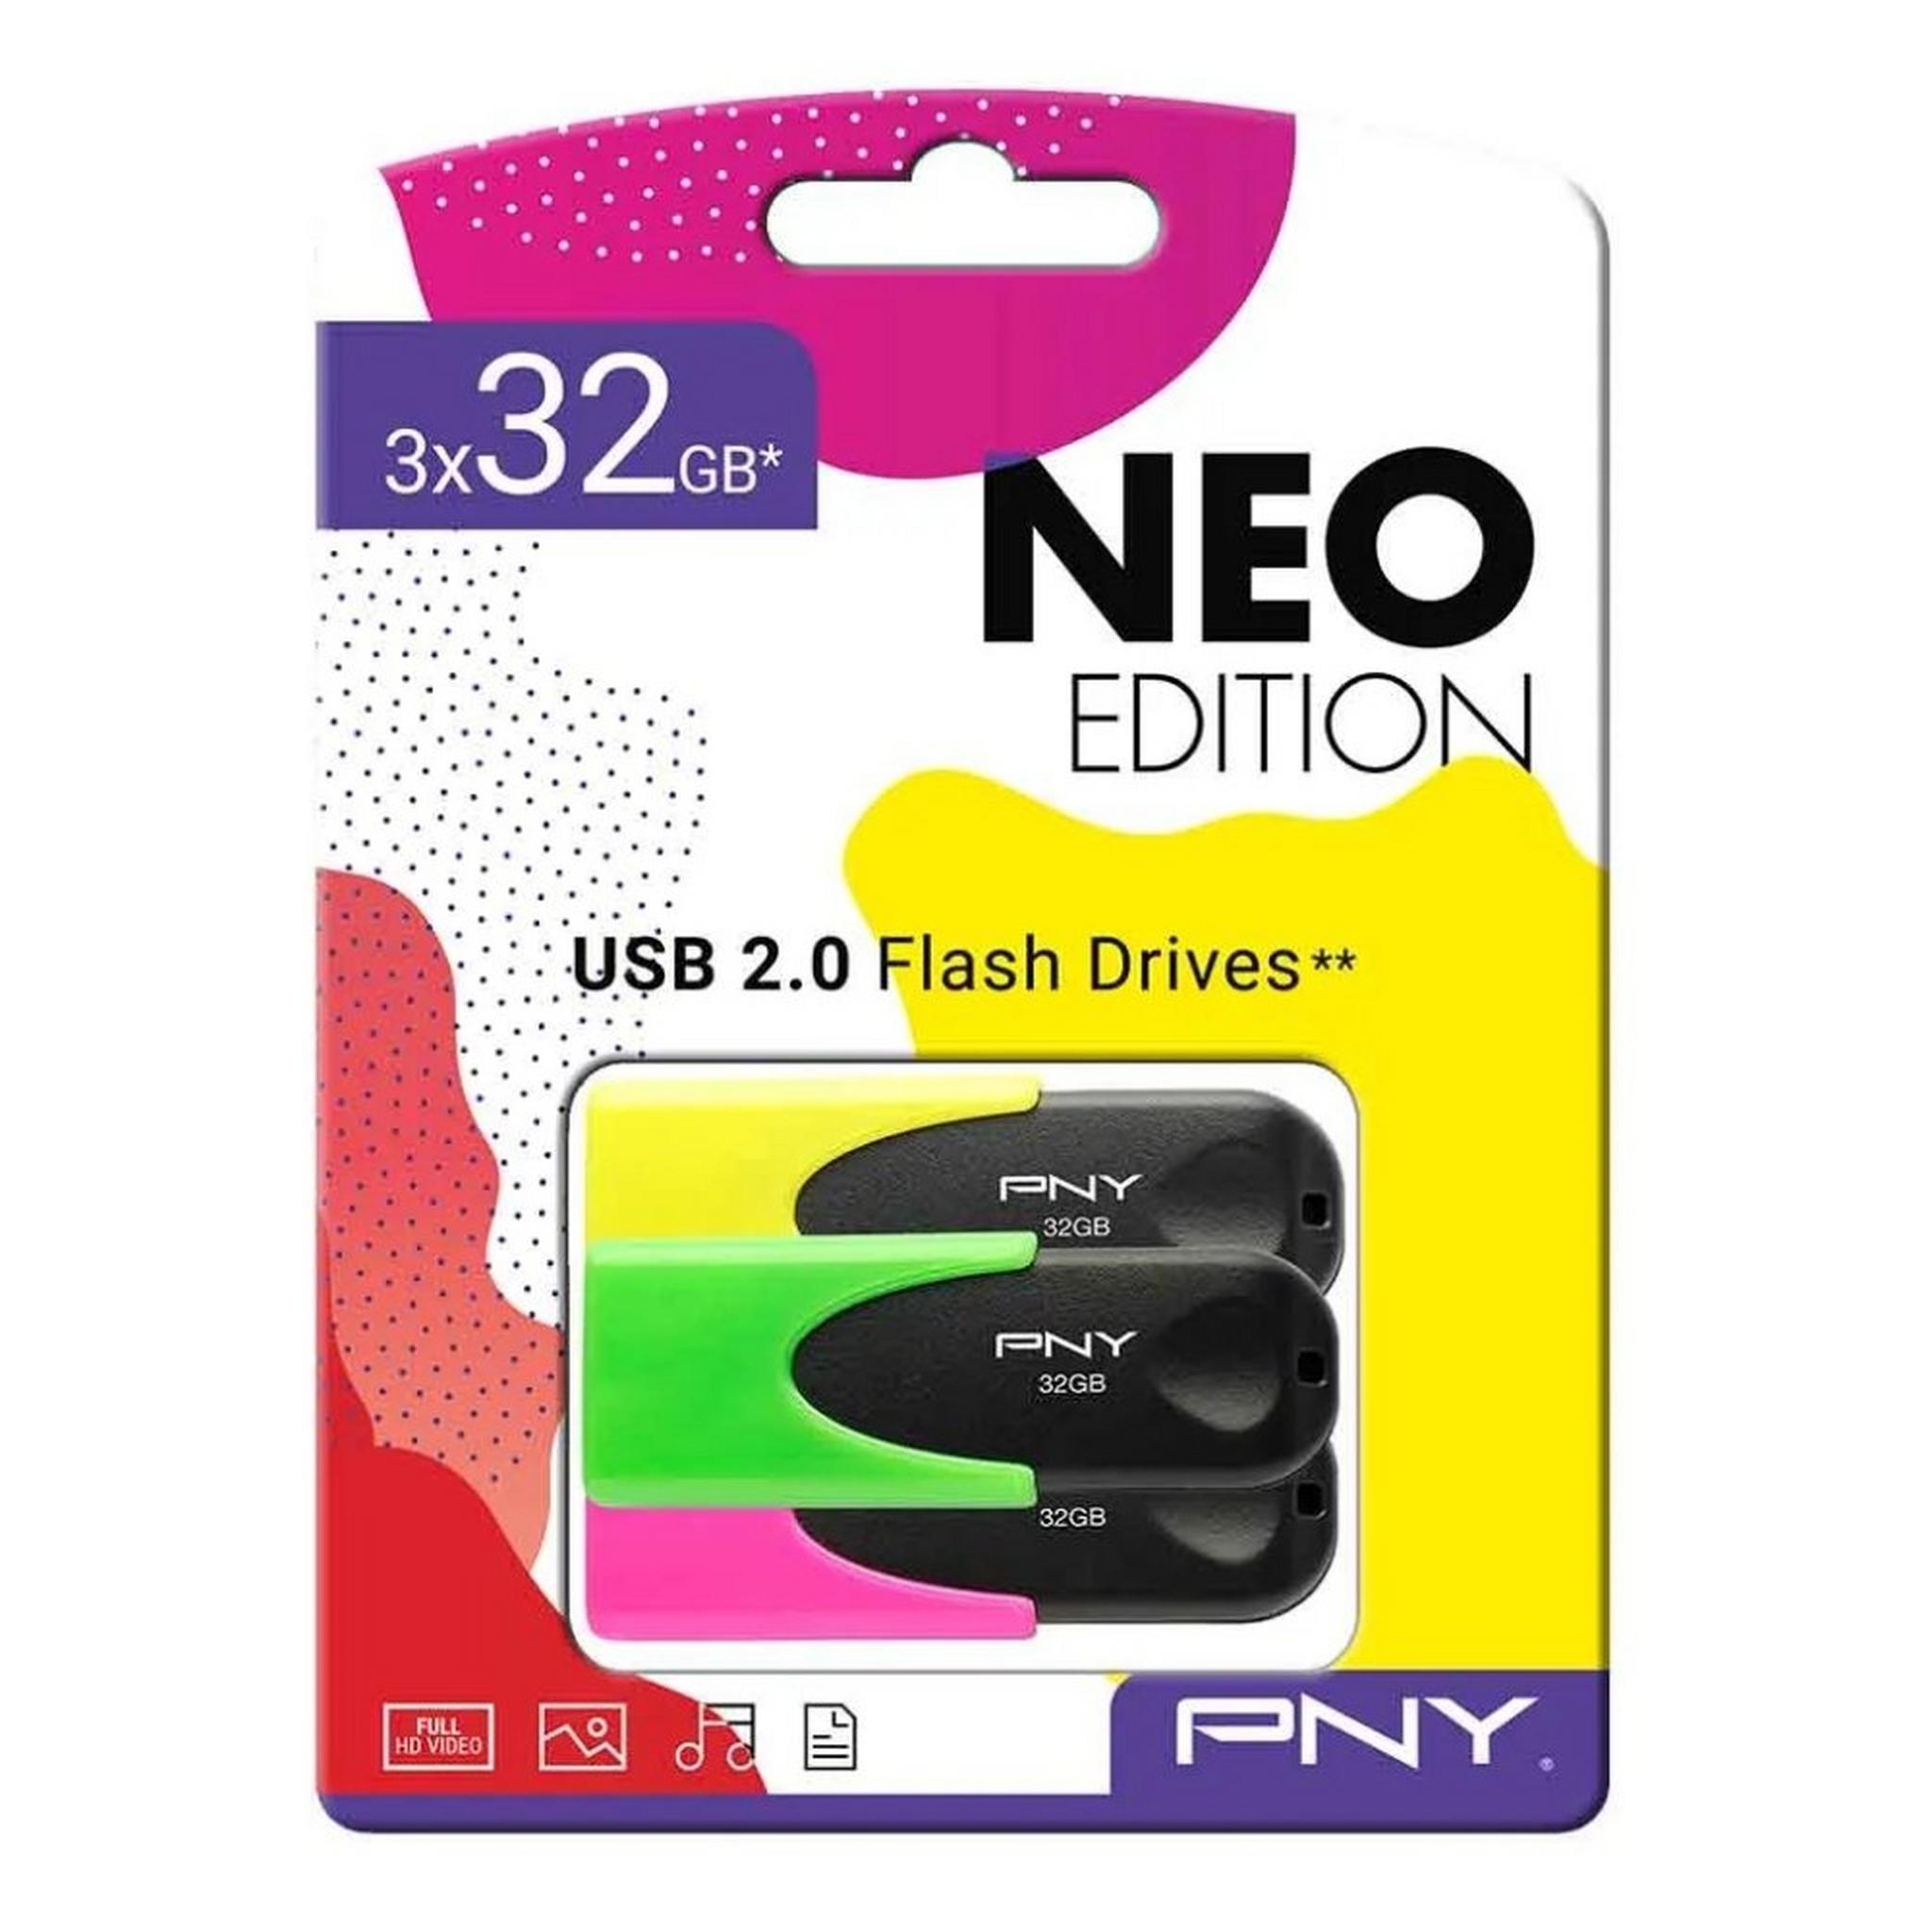 PNY Attache 4 USB 2.0 32GB Triple Pack - NEO Edition